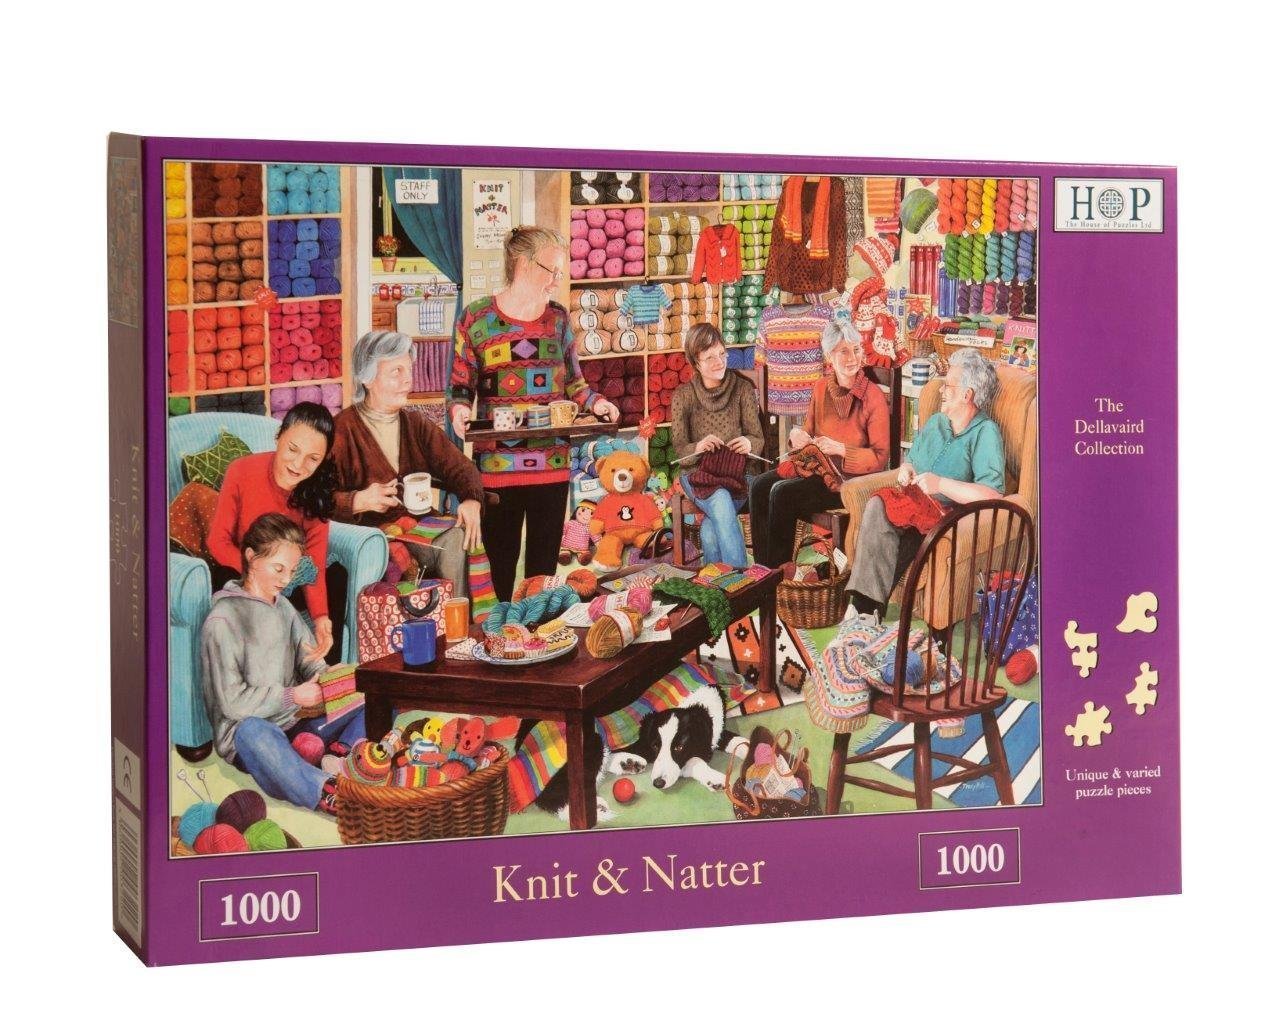 Knit & Natter 1000 PC Jigsaw Puzzle